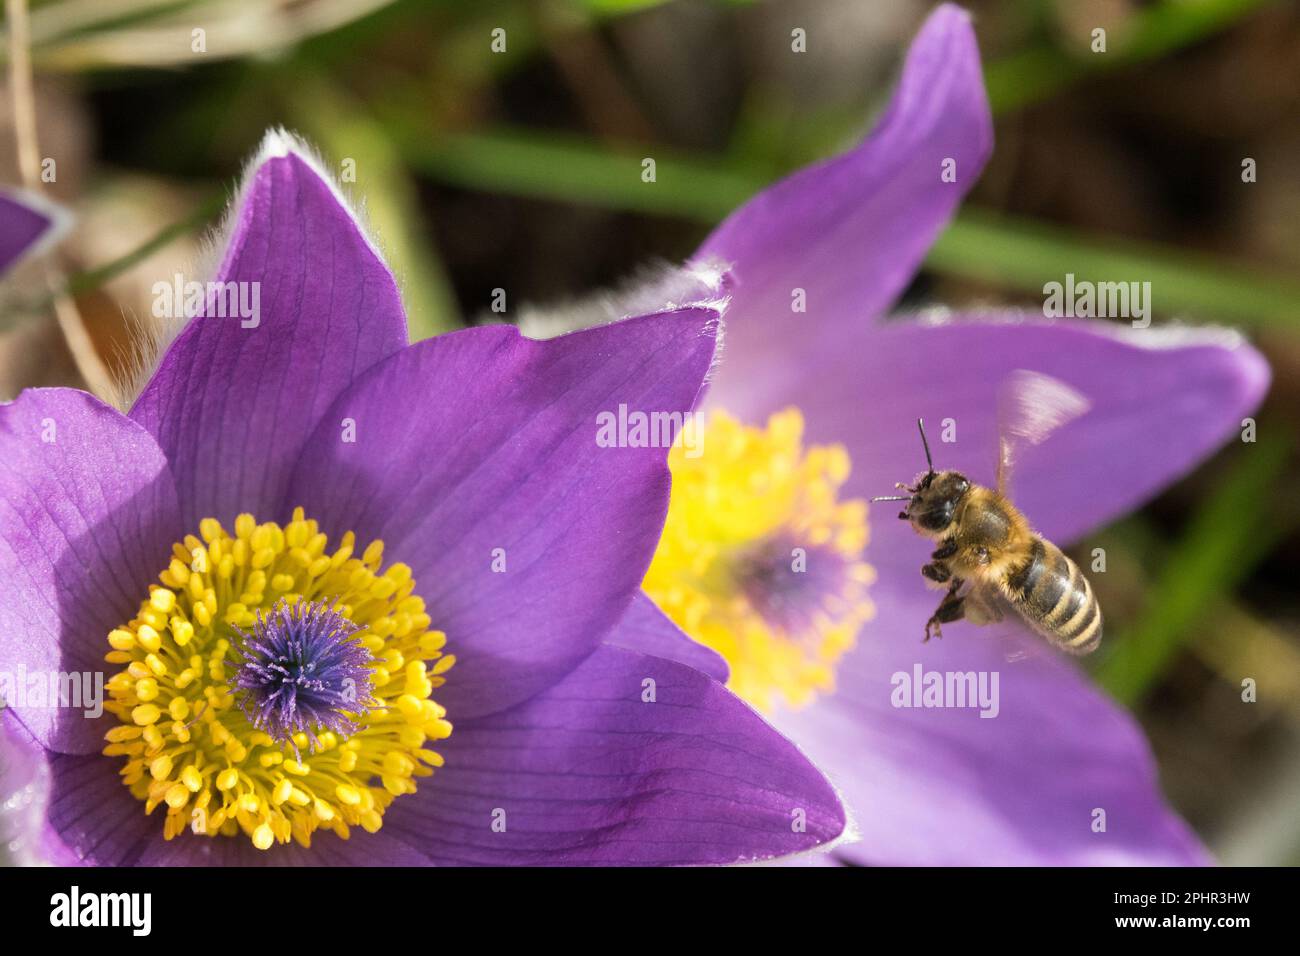 Api mellifere europee, Flying, Flower, Pasque flower, Pulsatilla vulgaris, Bee-friendly, pianta in primavera, insetto Foto Stock